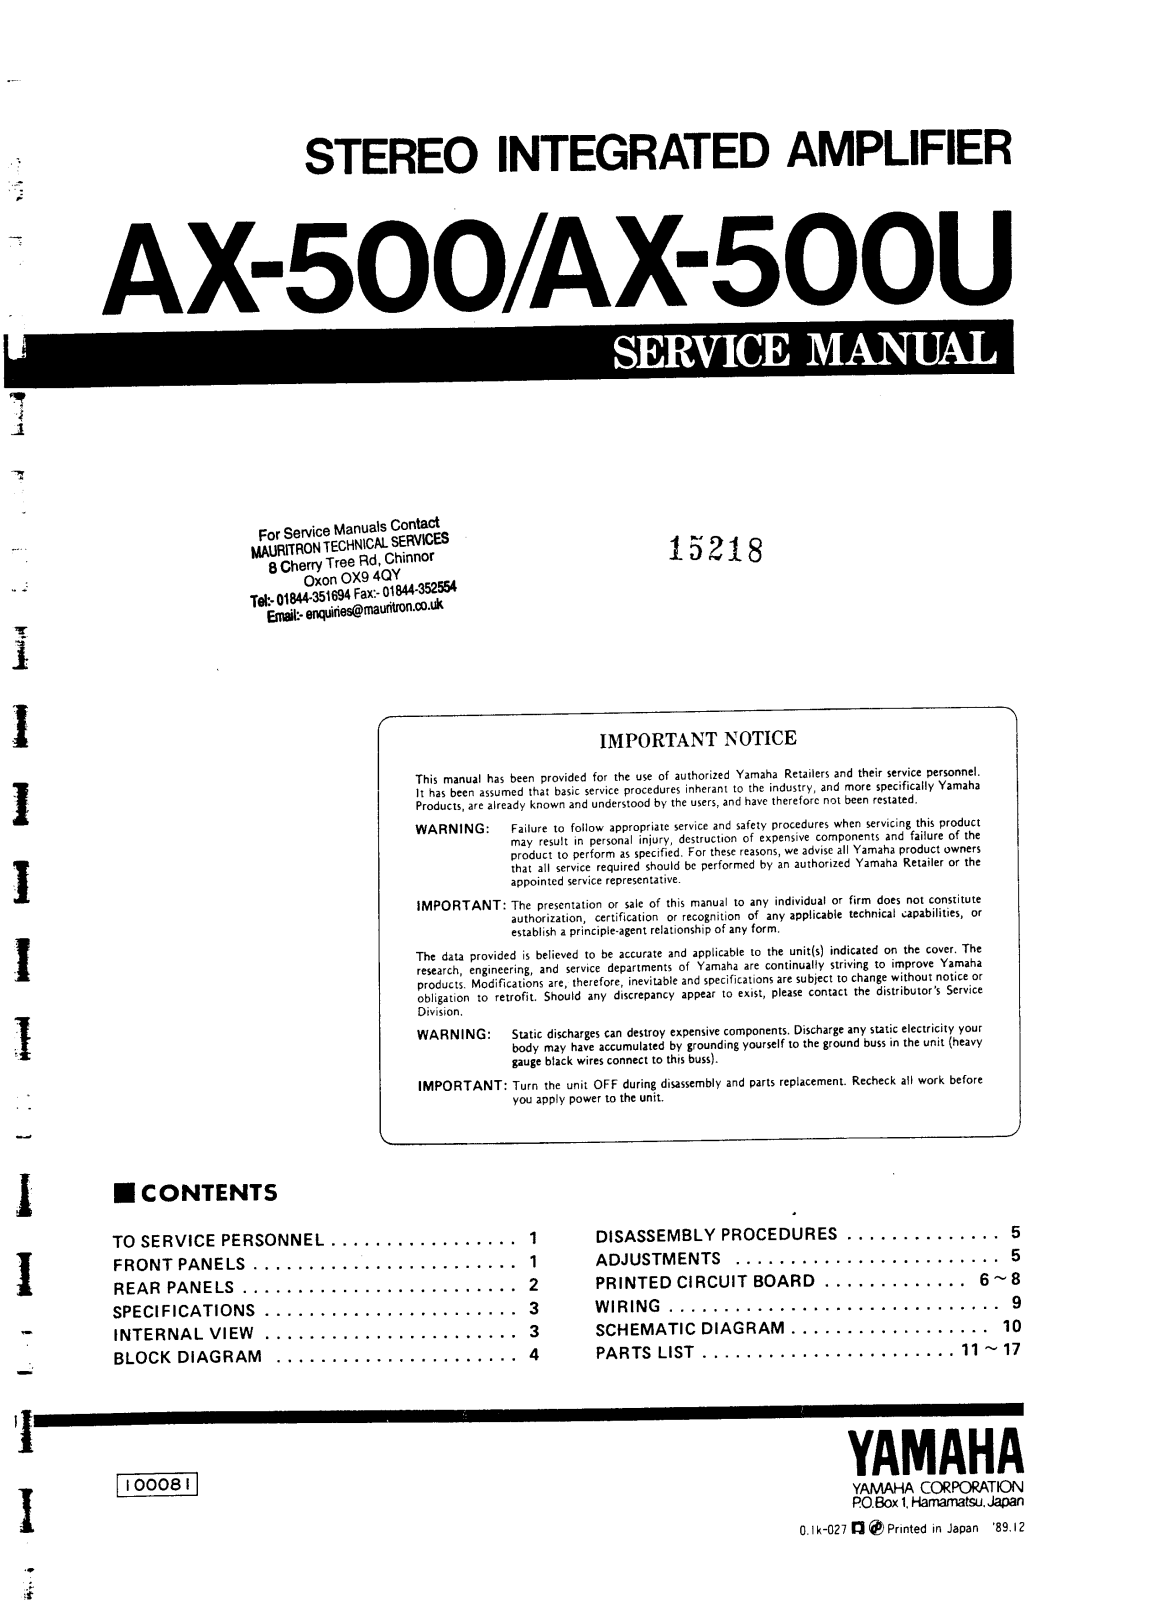 Yamaha AX-500 Service manual